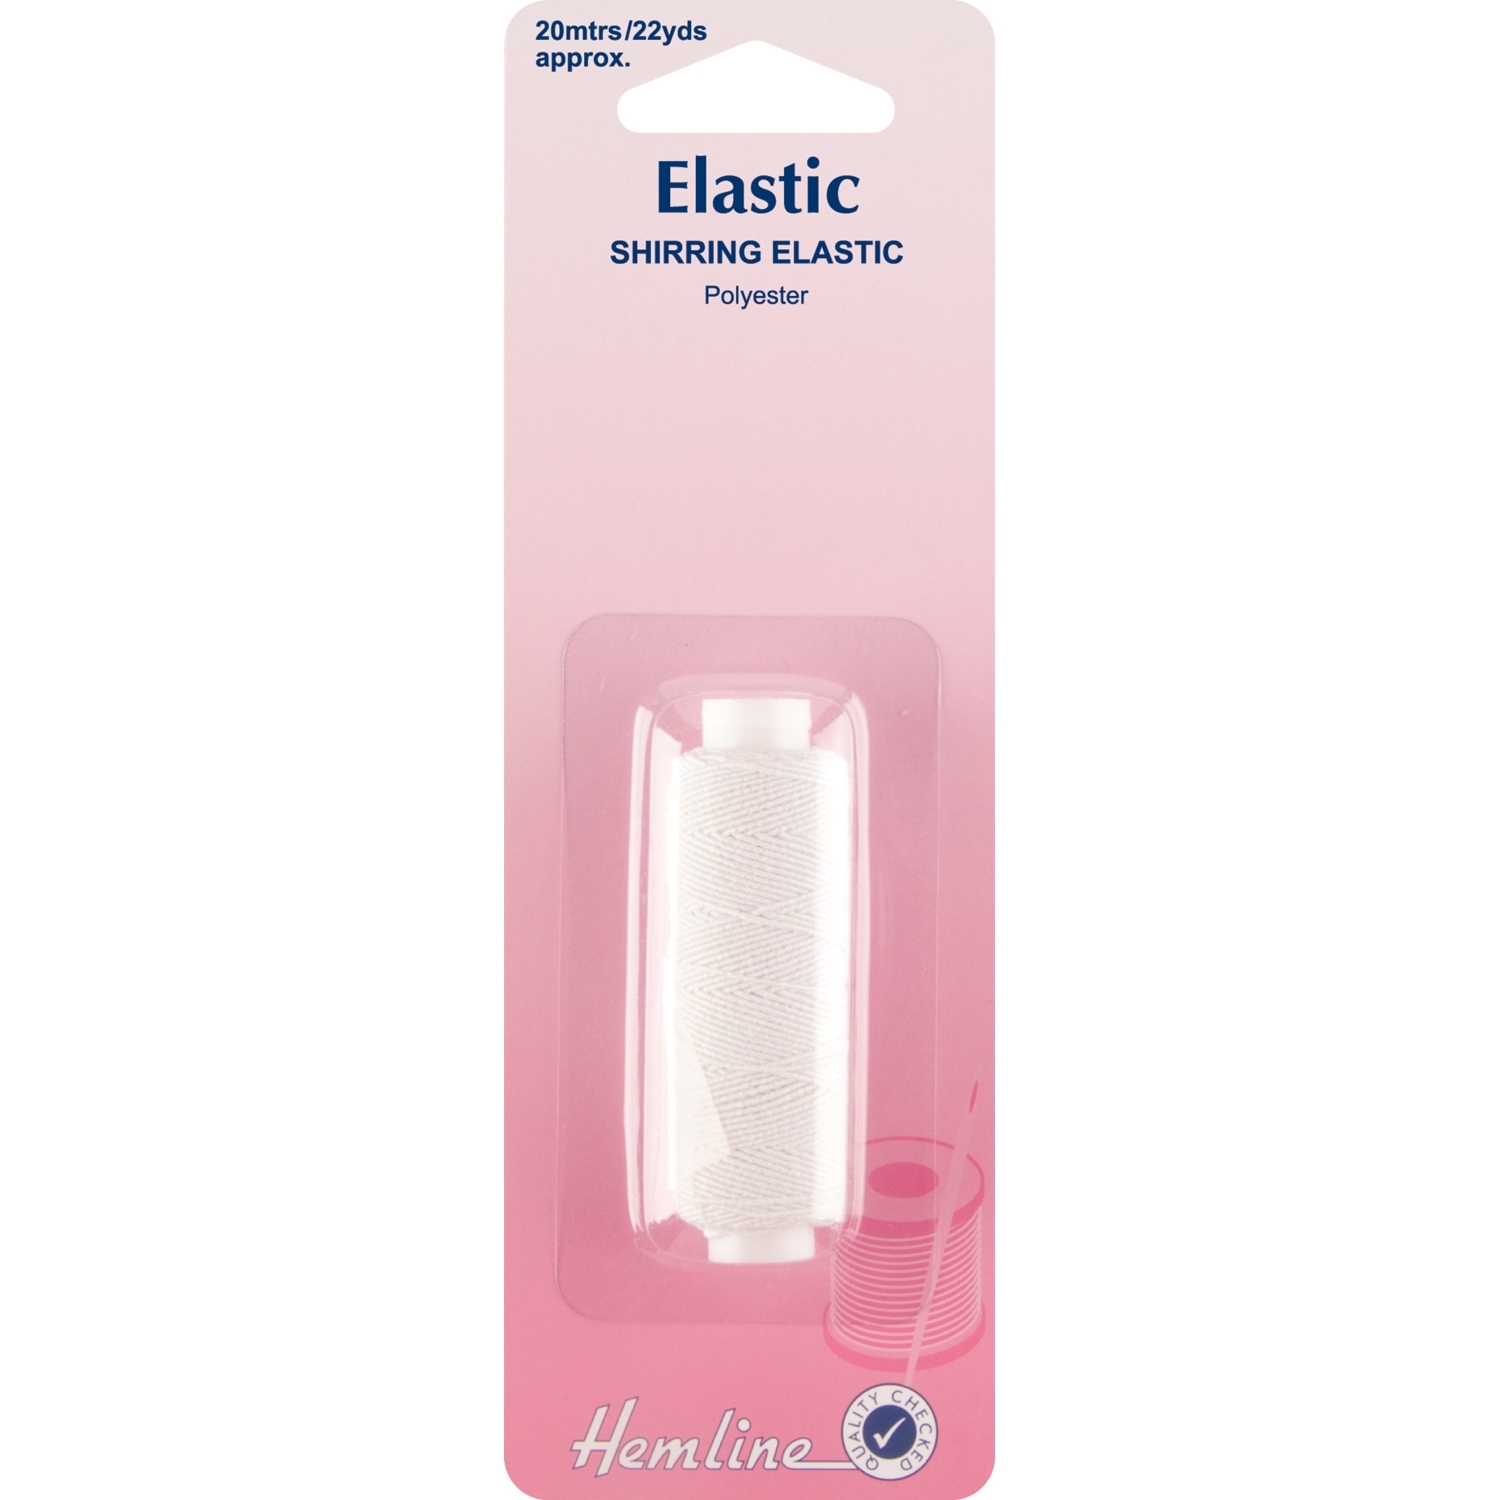 Hemline Shirring Elastic - White Image